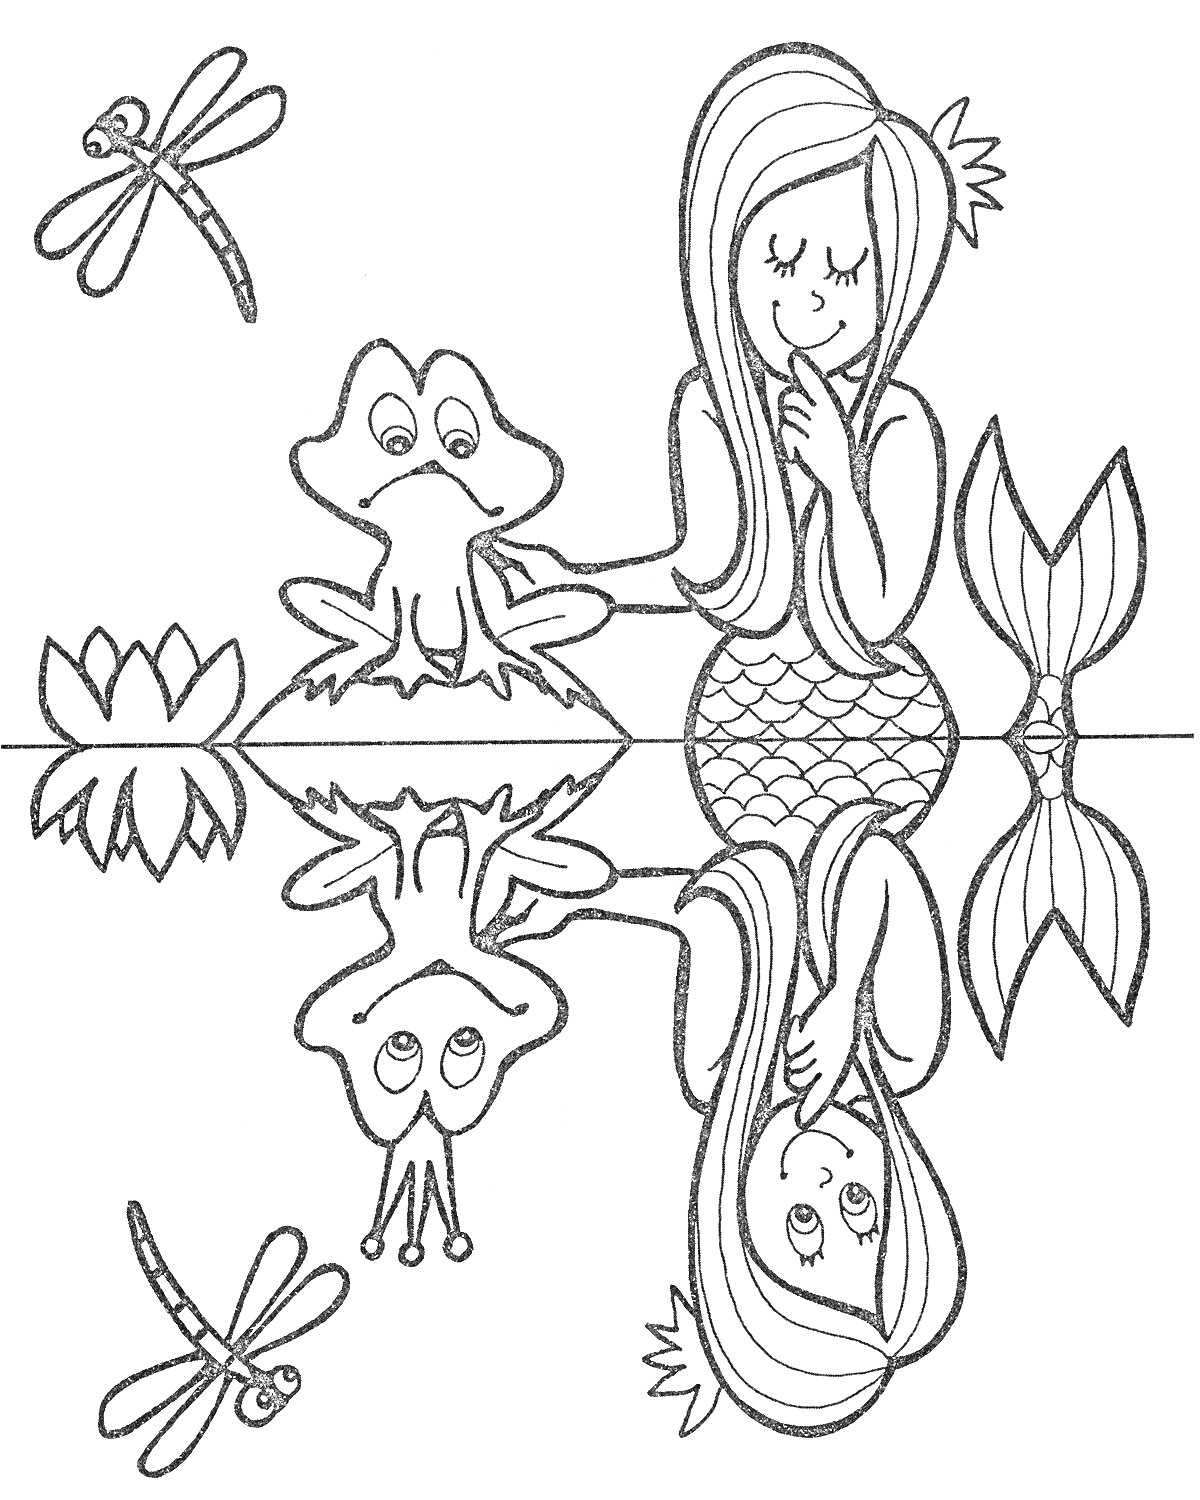 Русалка с лягушкой в водоеме, стрекозы и цветок лотоса